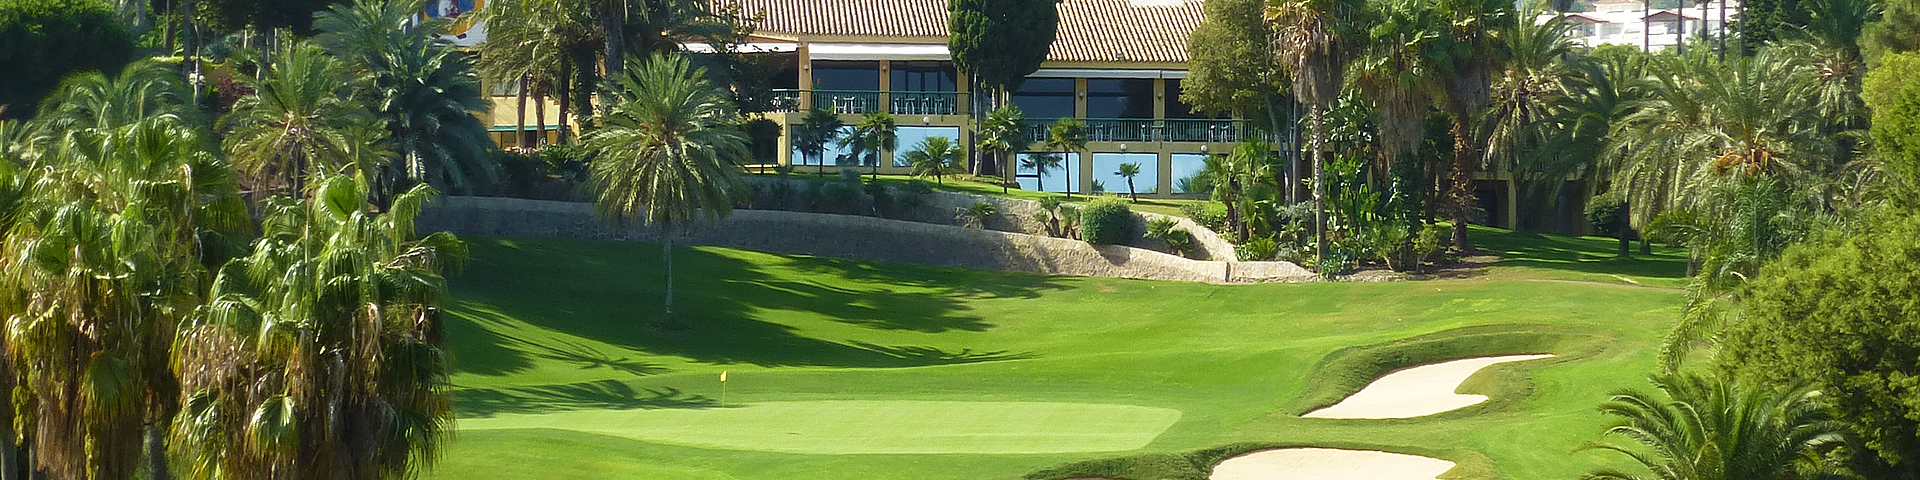 Golf Torrequebrada